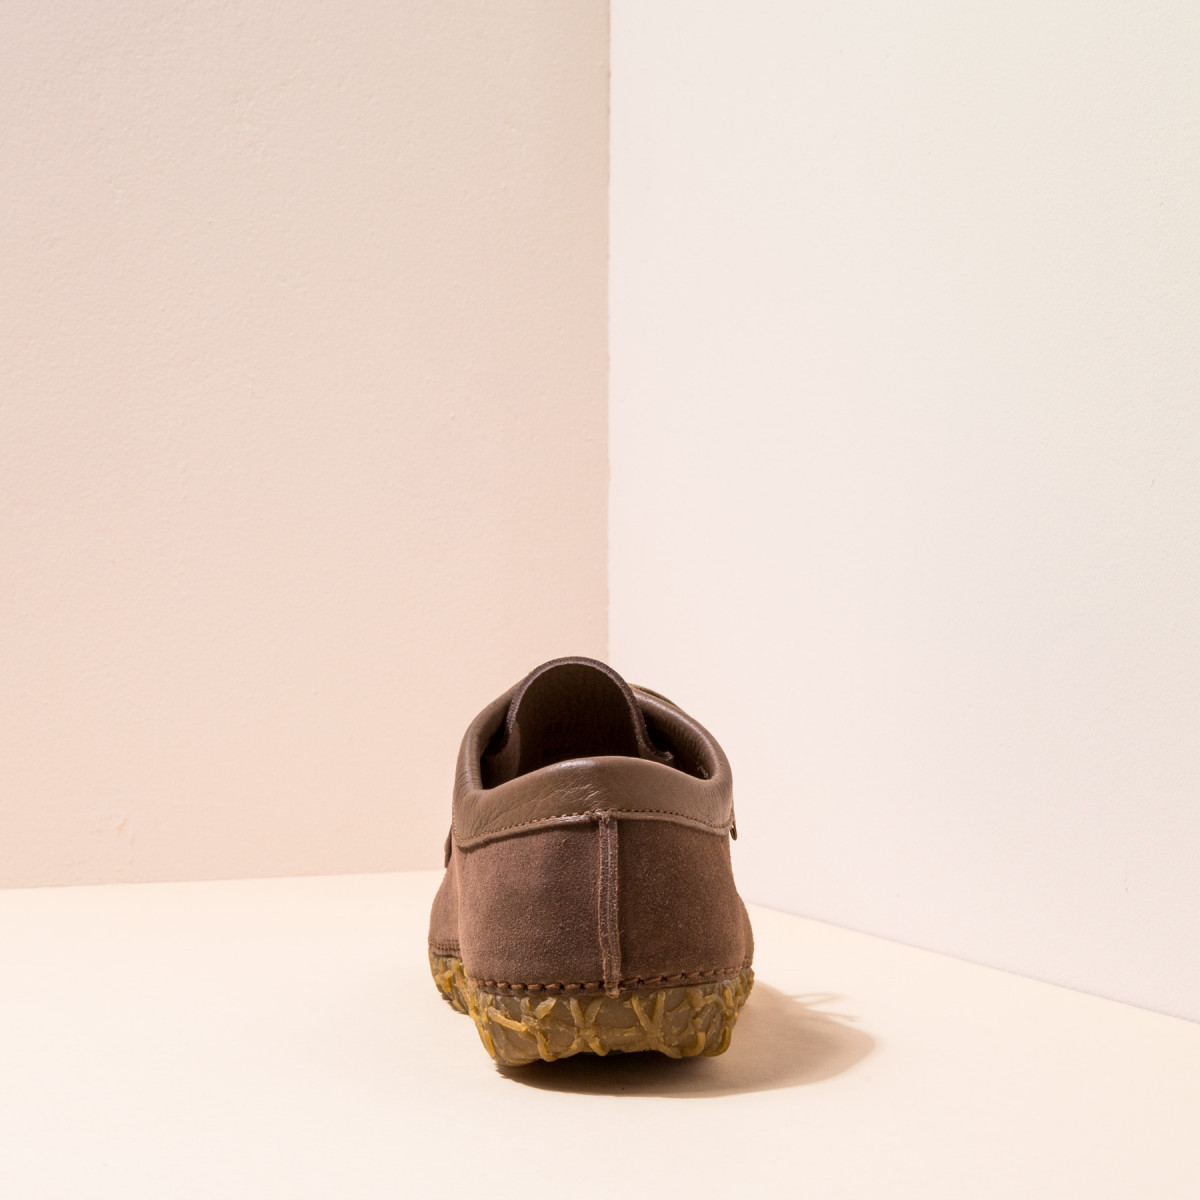 Chaussures confortables en daim - Marron - El naturalista